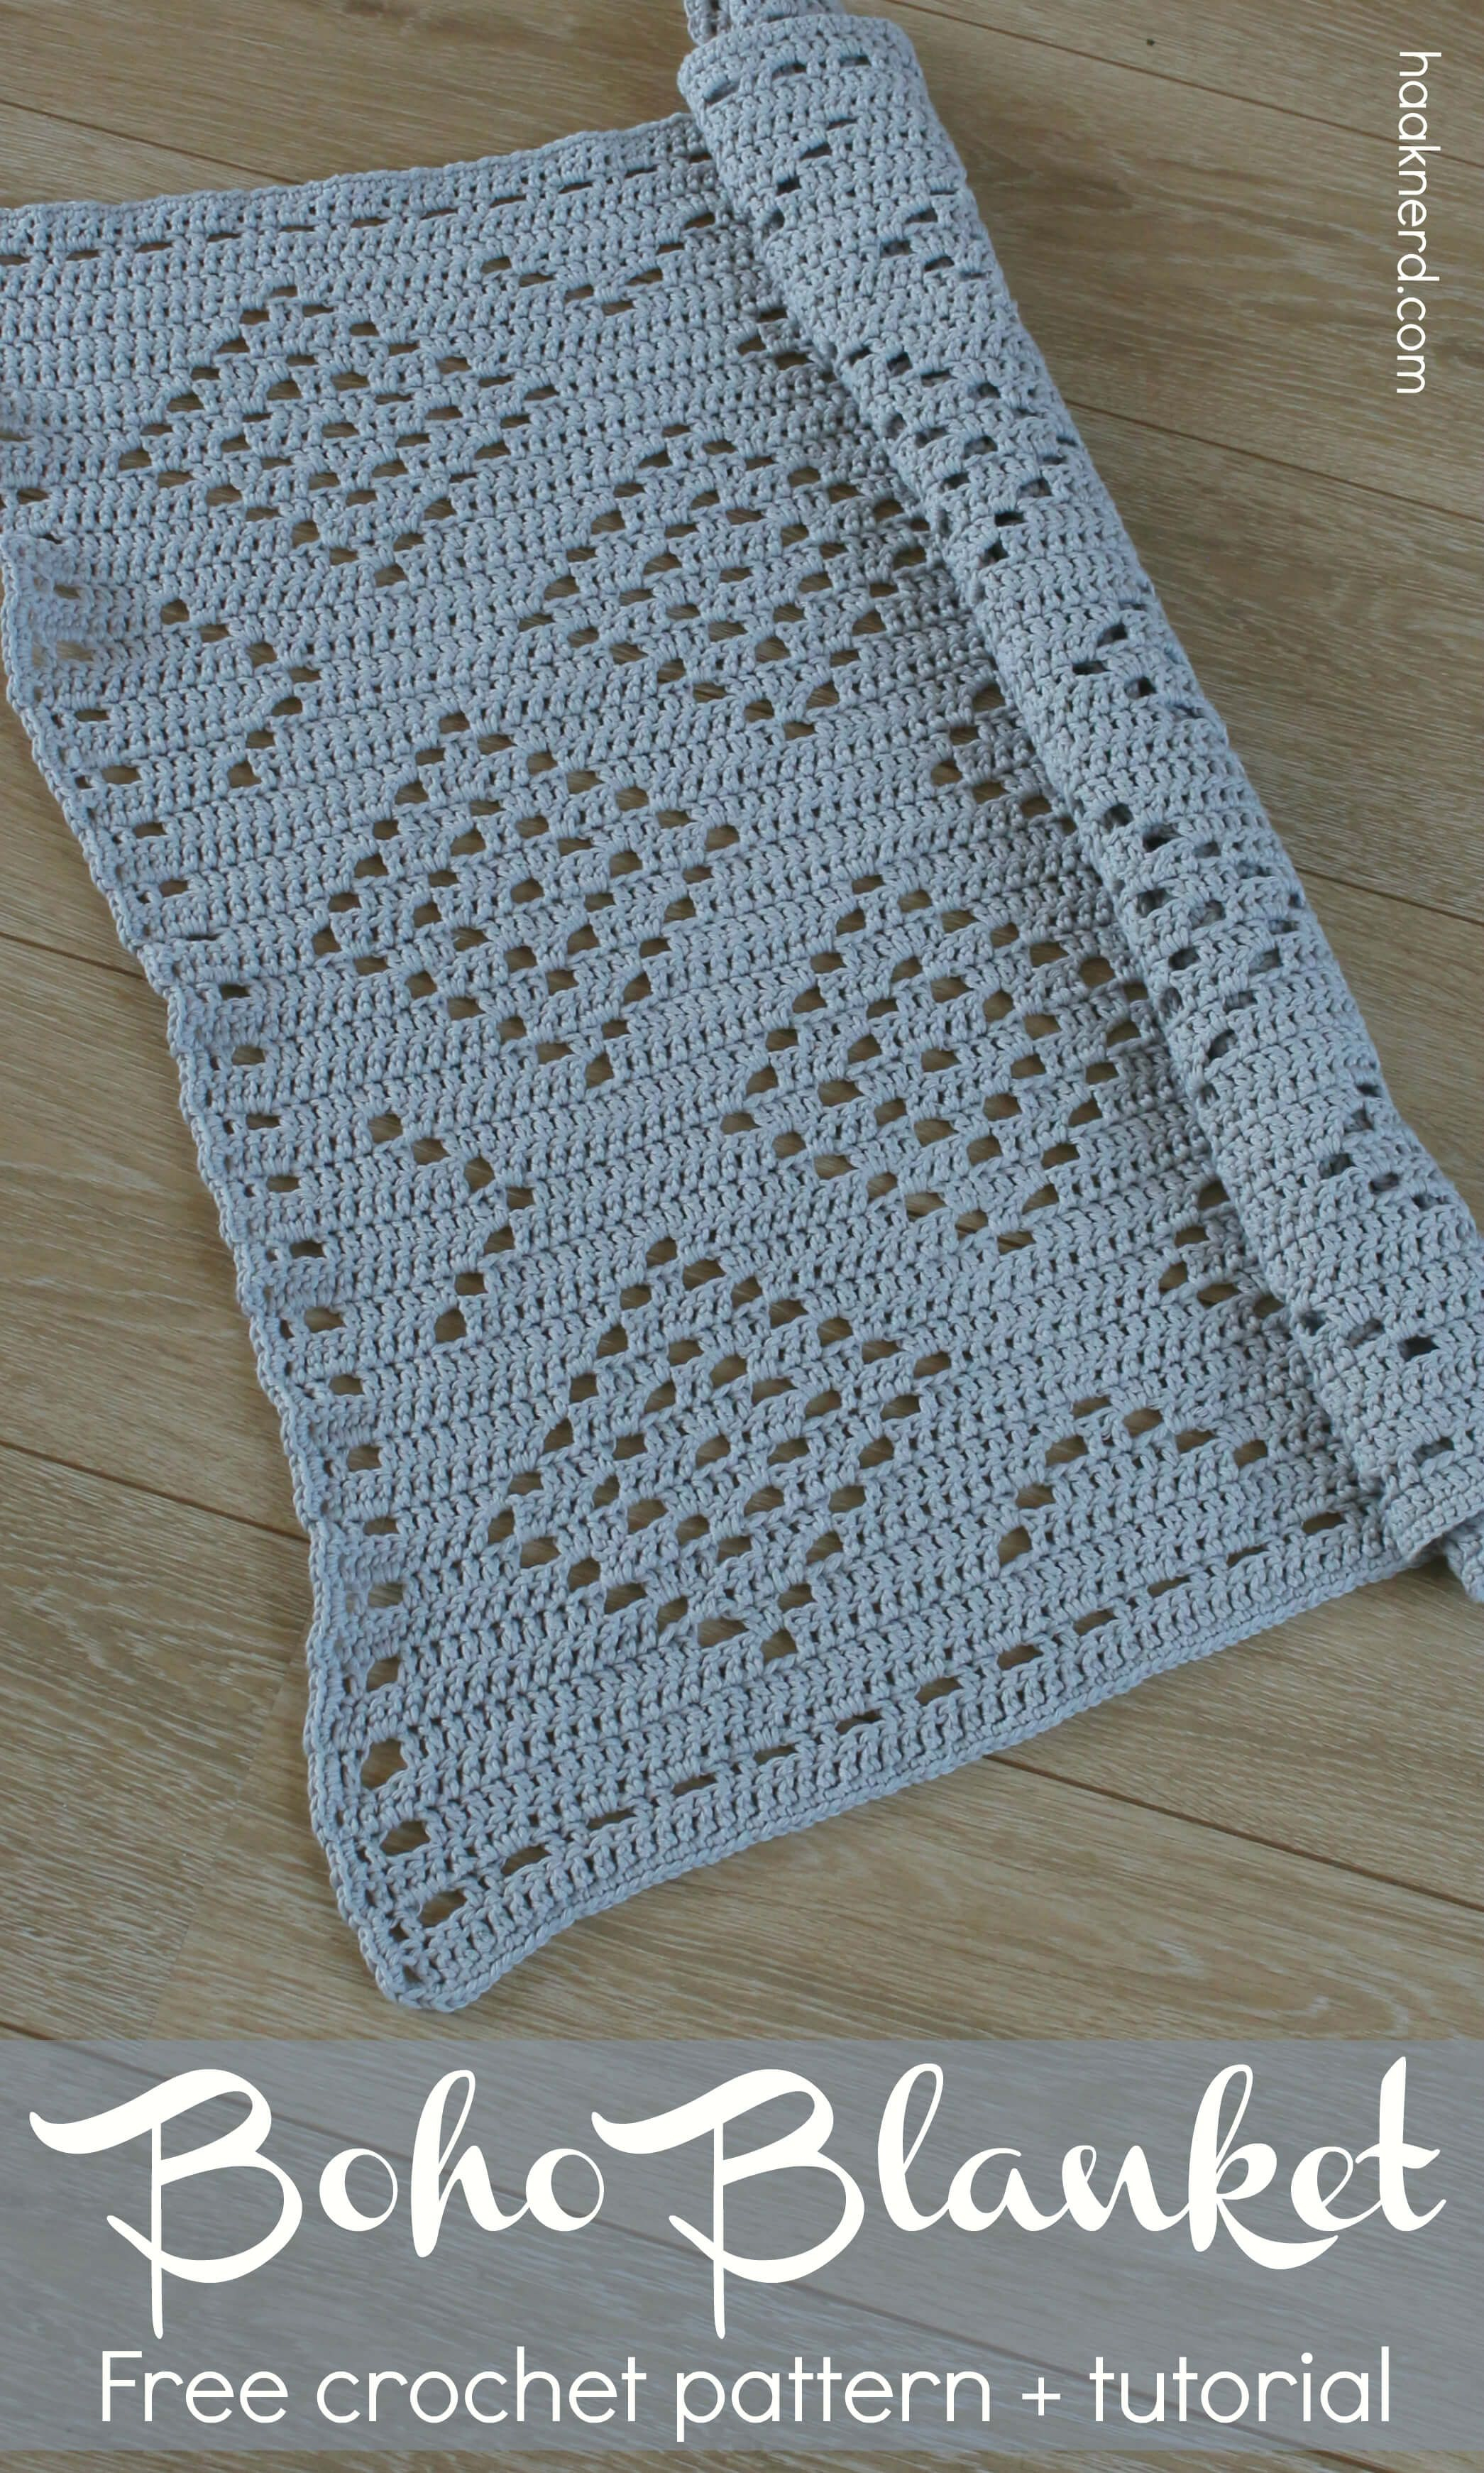 Filet Crochet Afghan Patterns Boho Ba Blanket Yarn Love Pinterest Crochet Crochet